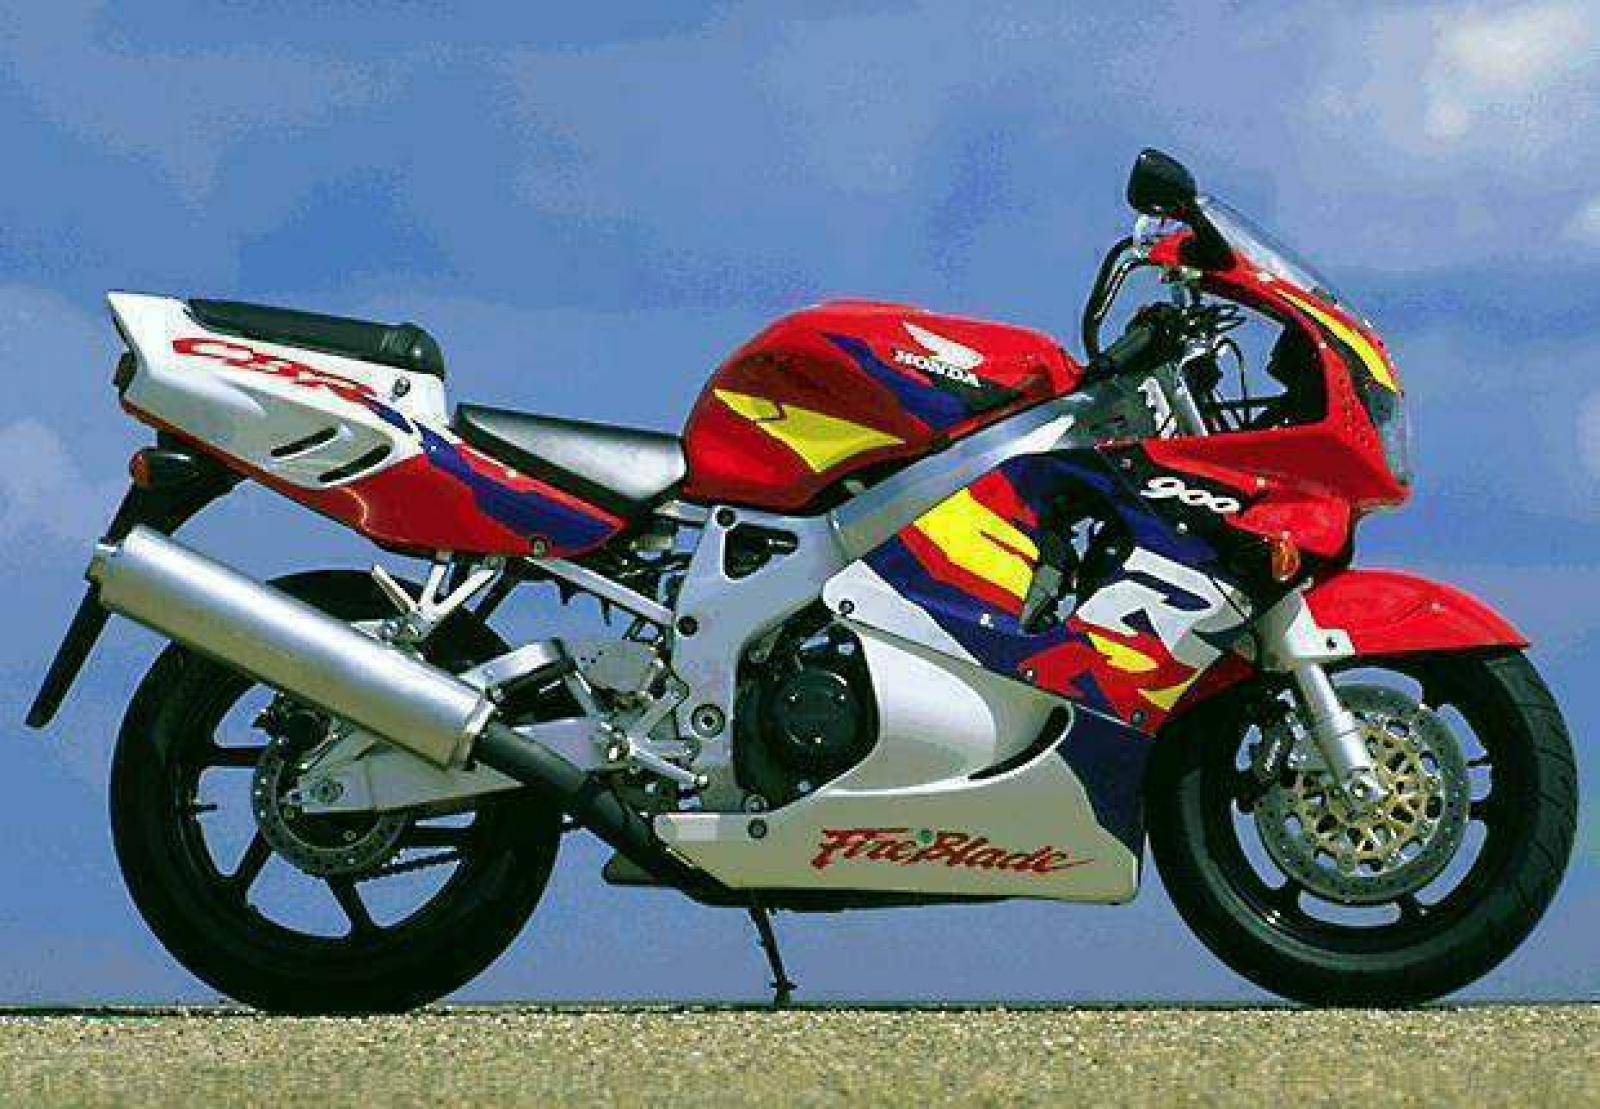 Honda cbr400rr: review, history, specs - bikeswiki.com, japanese motorcycle encyclopedia